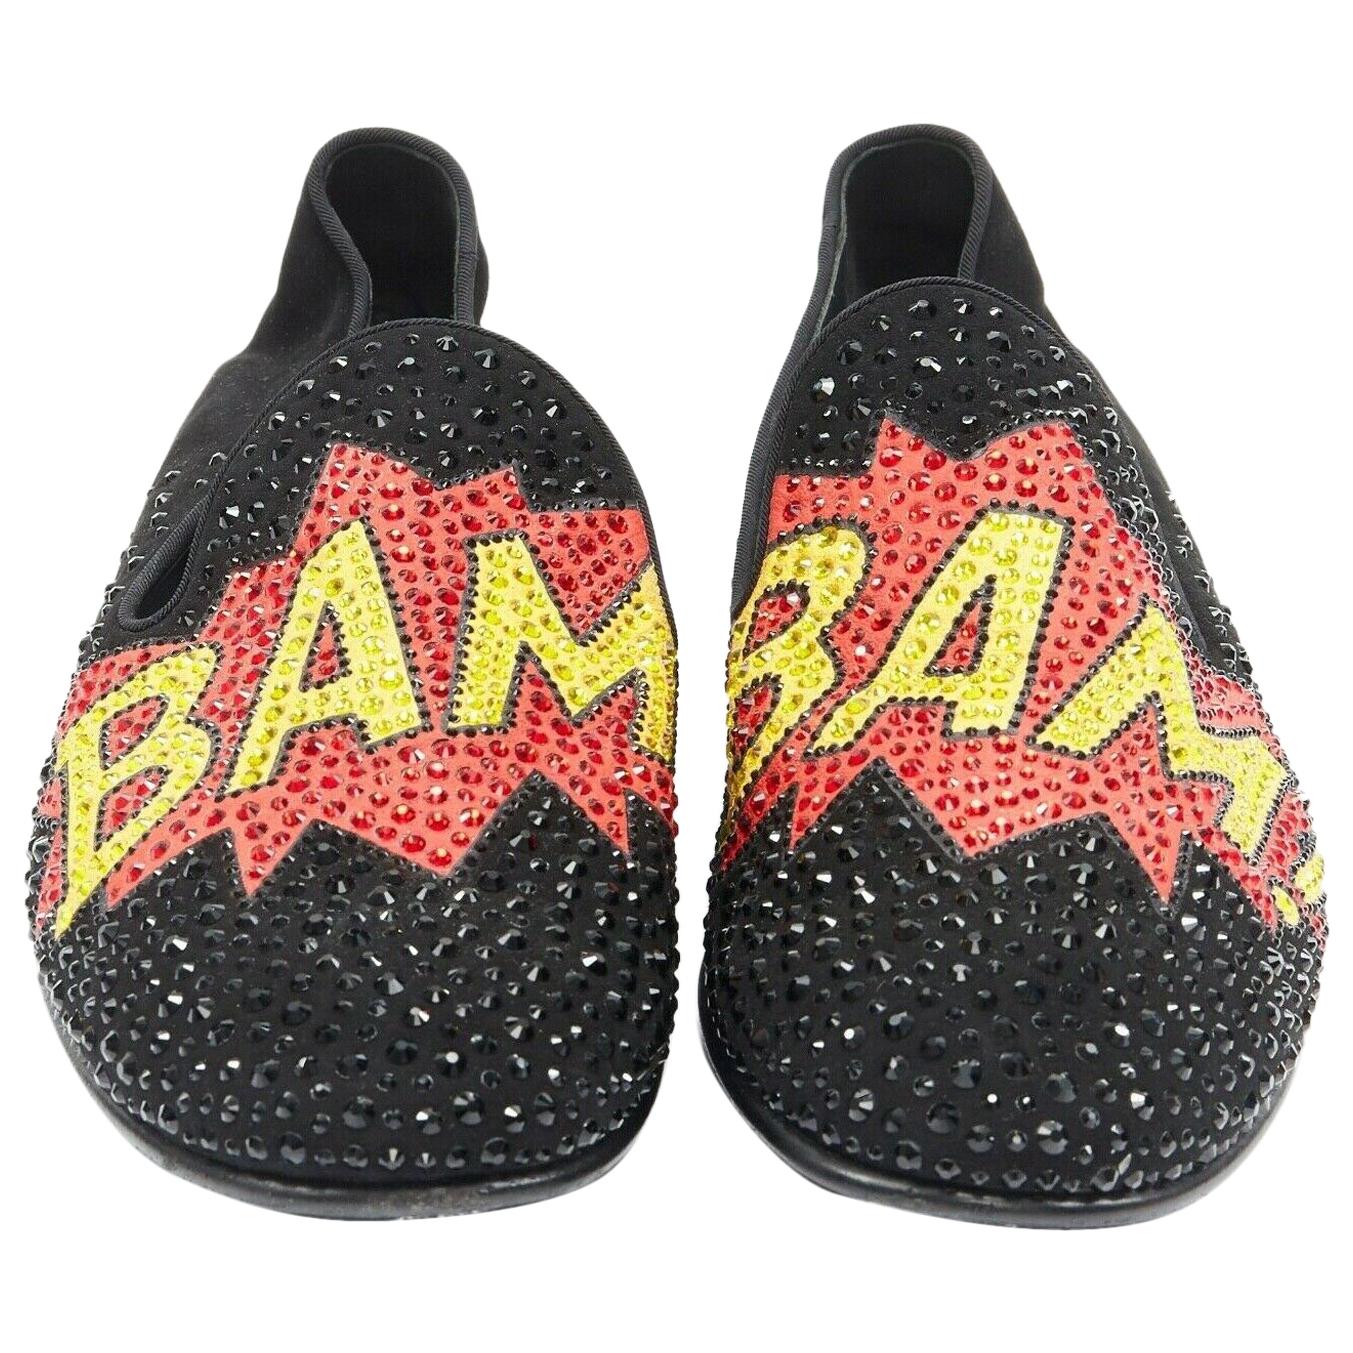 GIUSEPPE ZANOTTI 2019 Bam crystal embellished pop art black suede loafer EU44